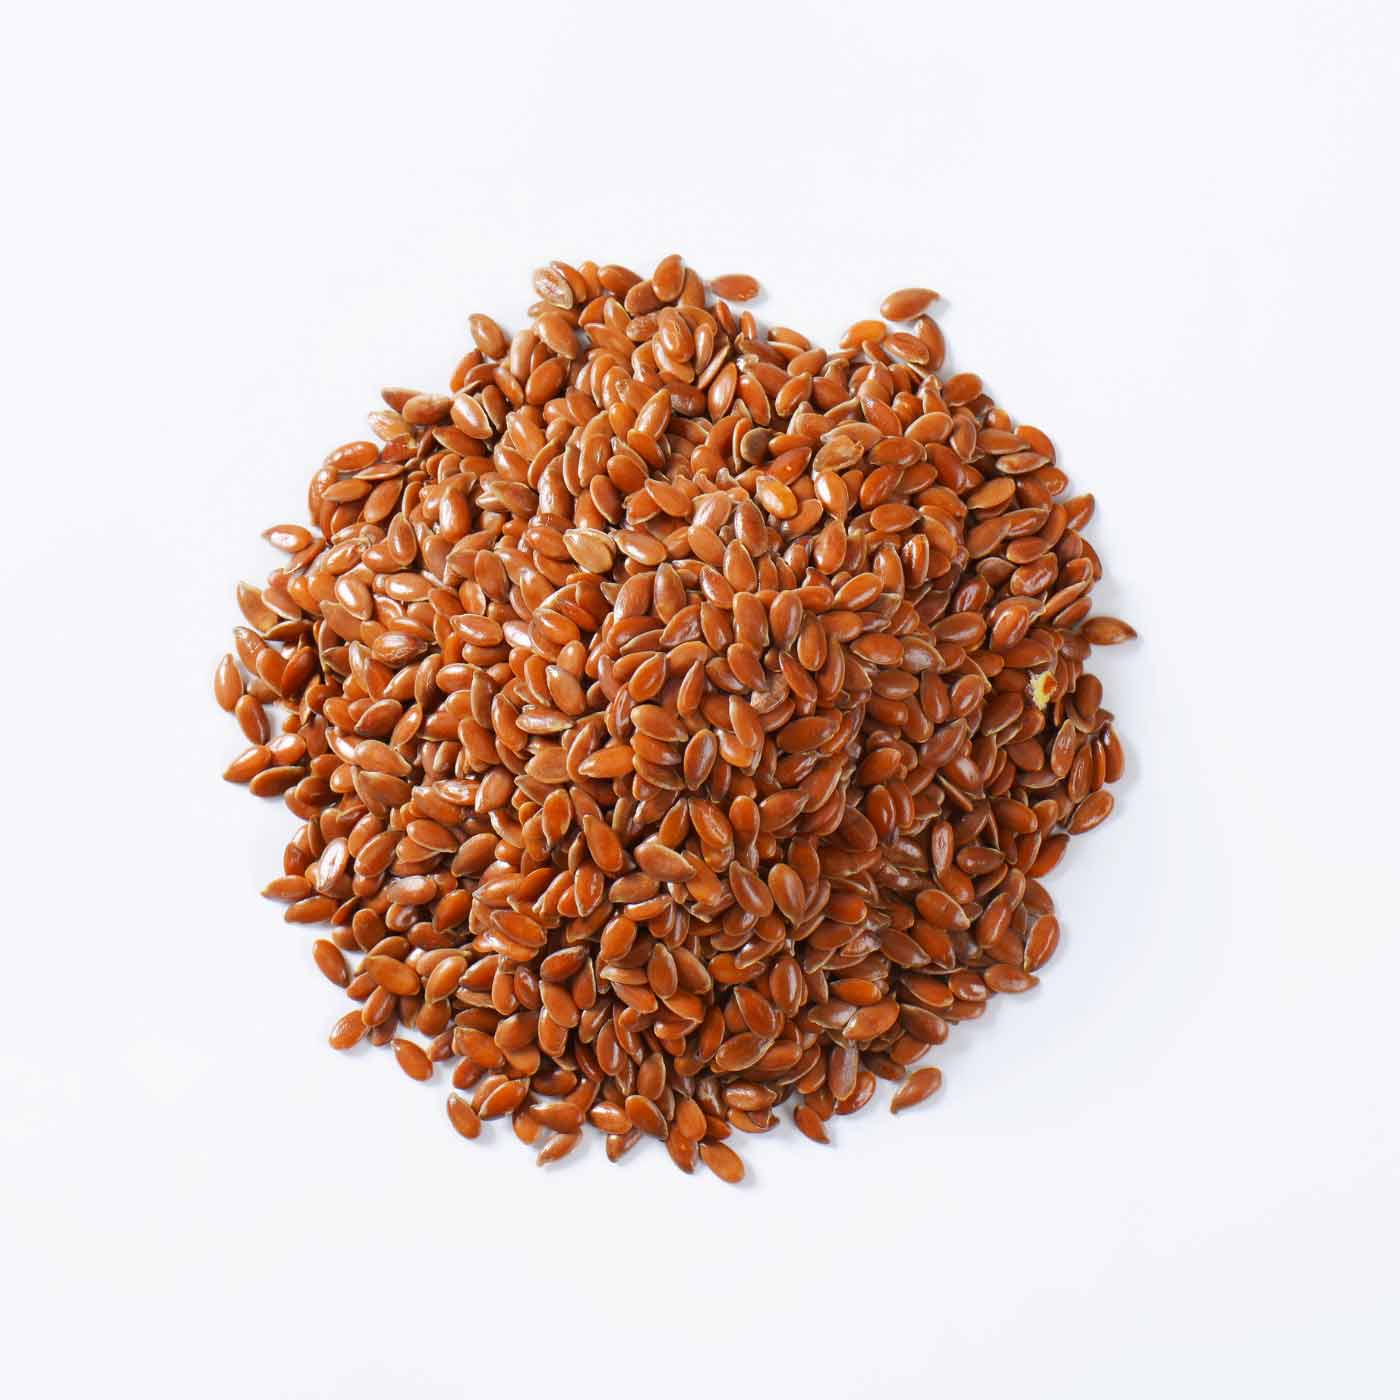 Graines de Lin brun Bio amoseeds specialiste des super aliments Bio